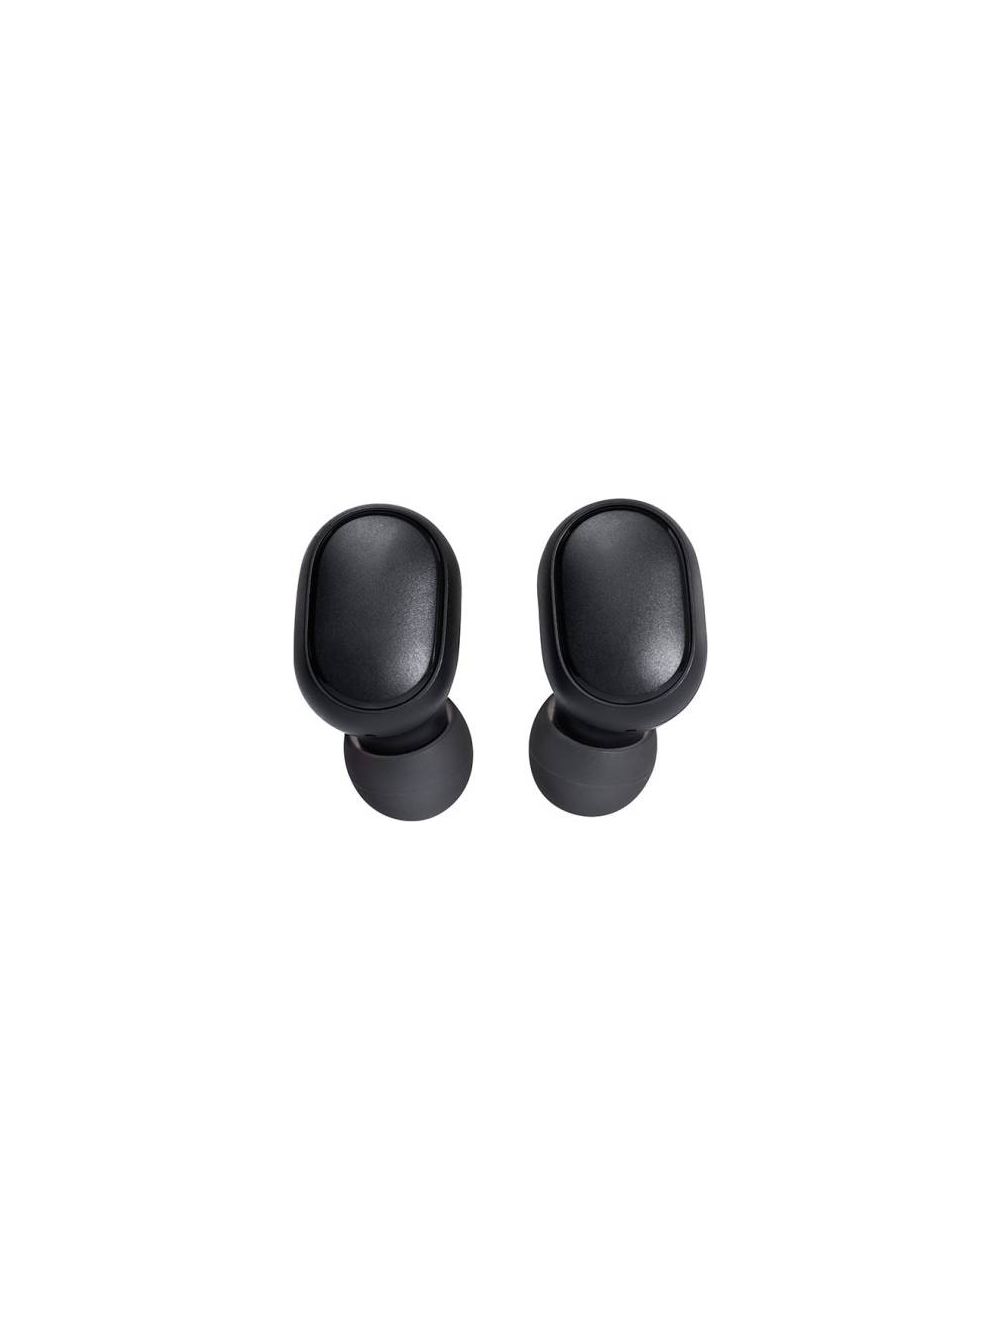 REDMI Earbuds S Bluetooth Headset